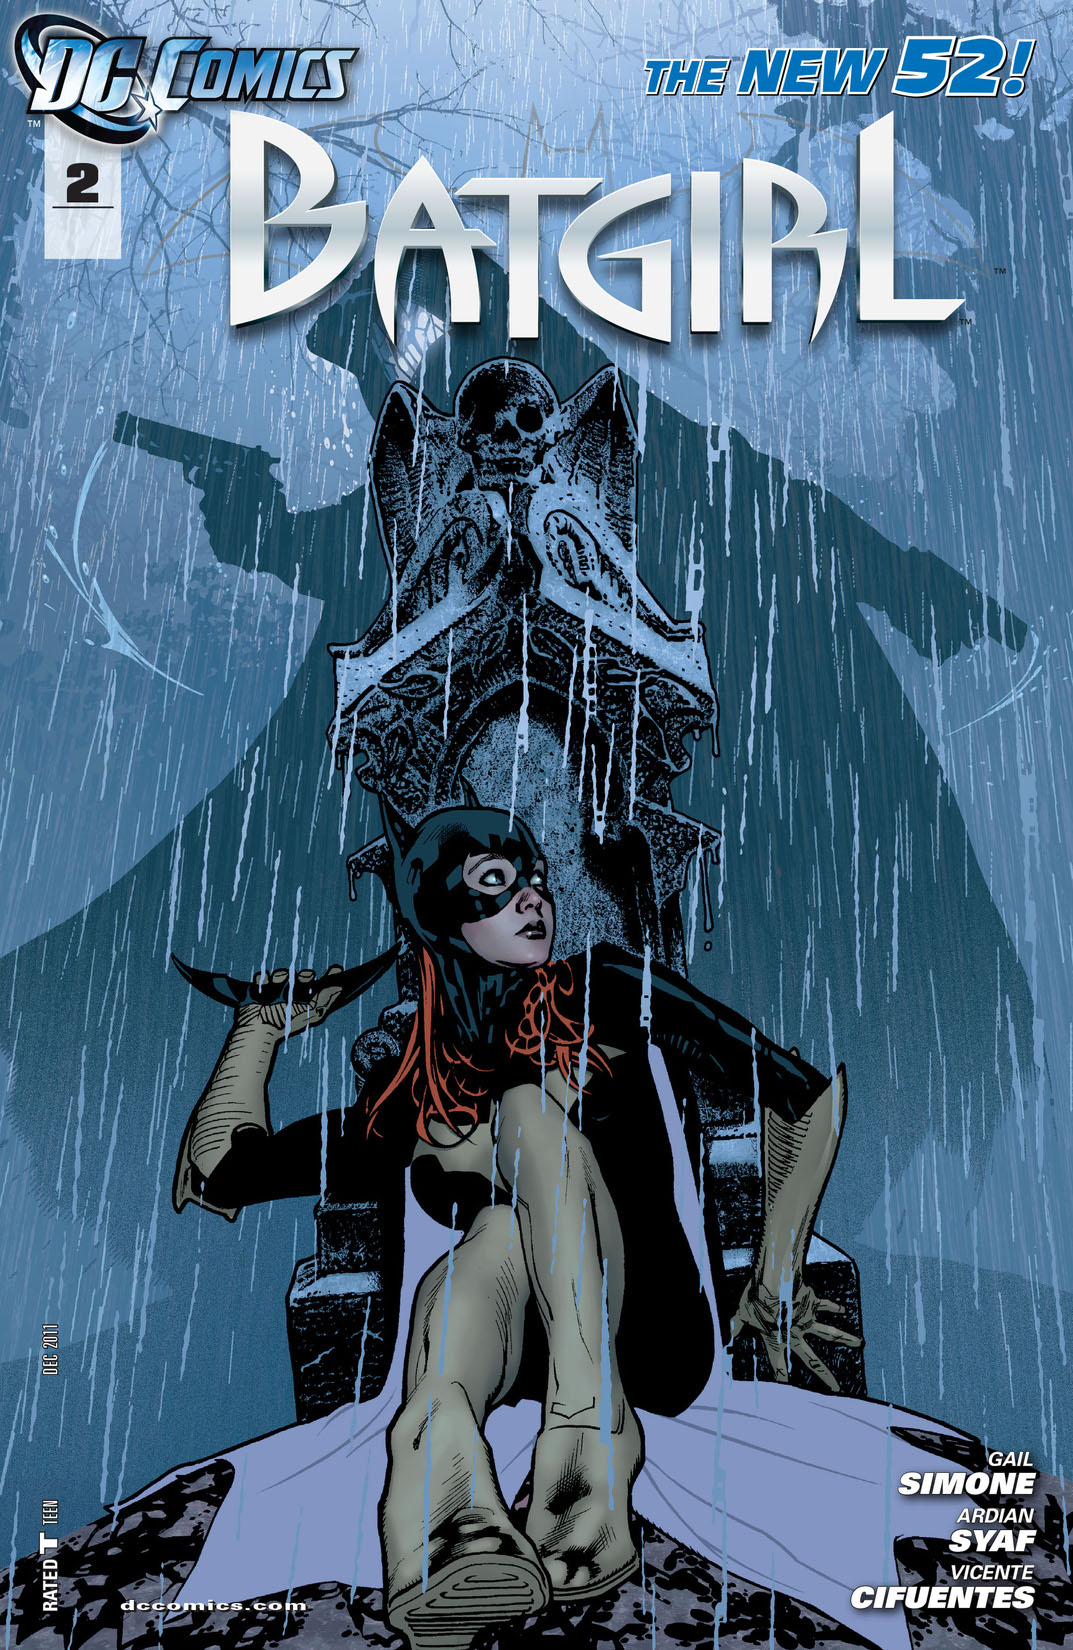 Batgirl (2011-) #2 preview images